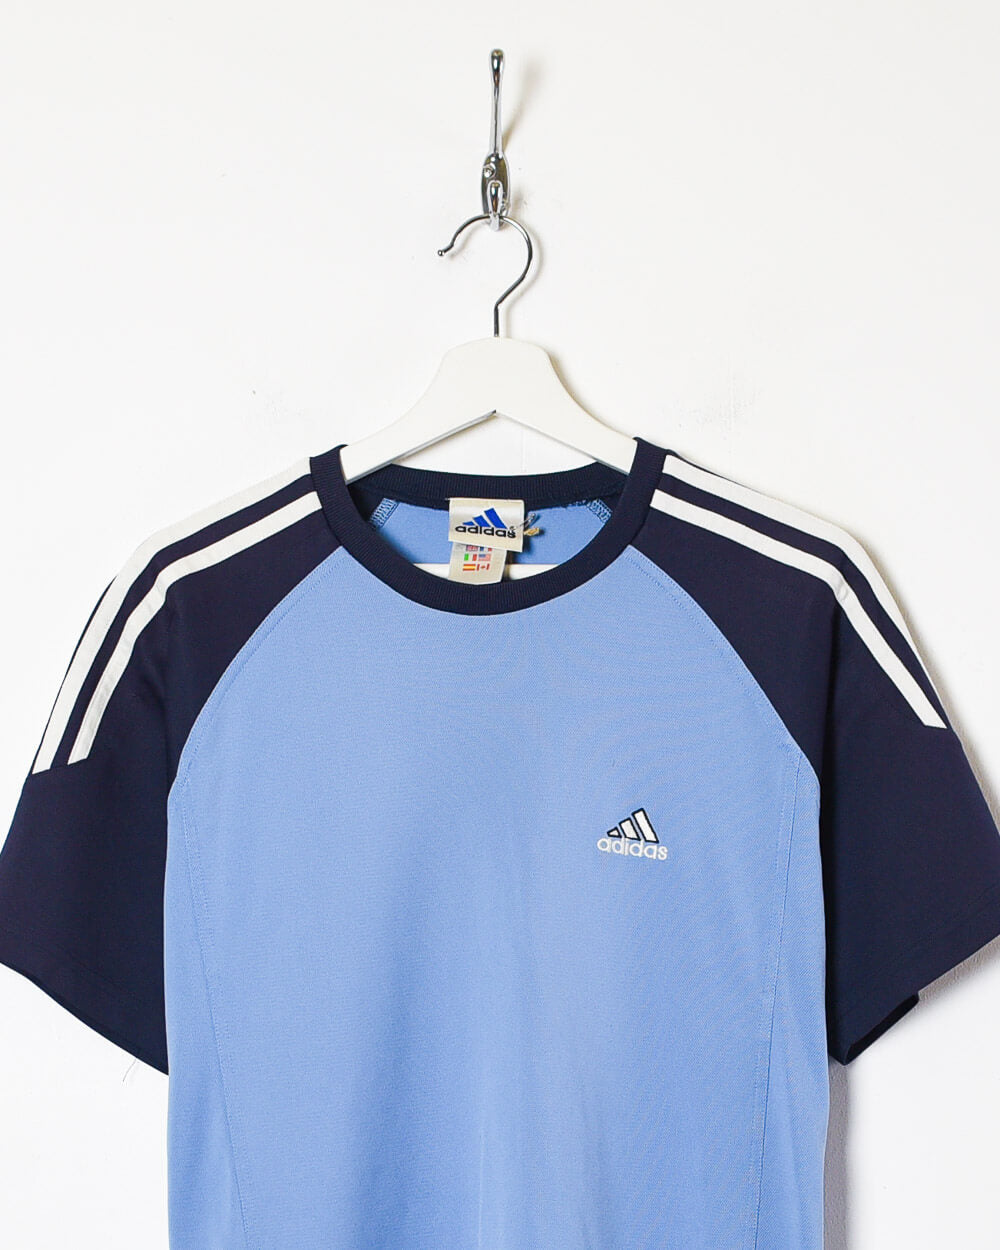 Blue Adidas Women's T-Shirt - X-Large 